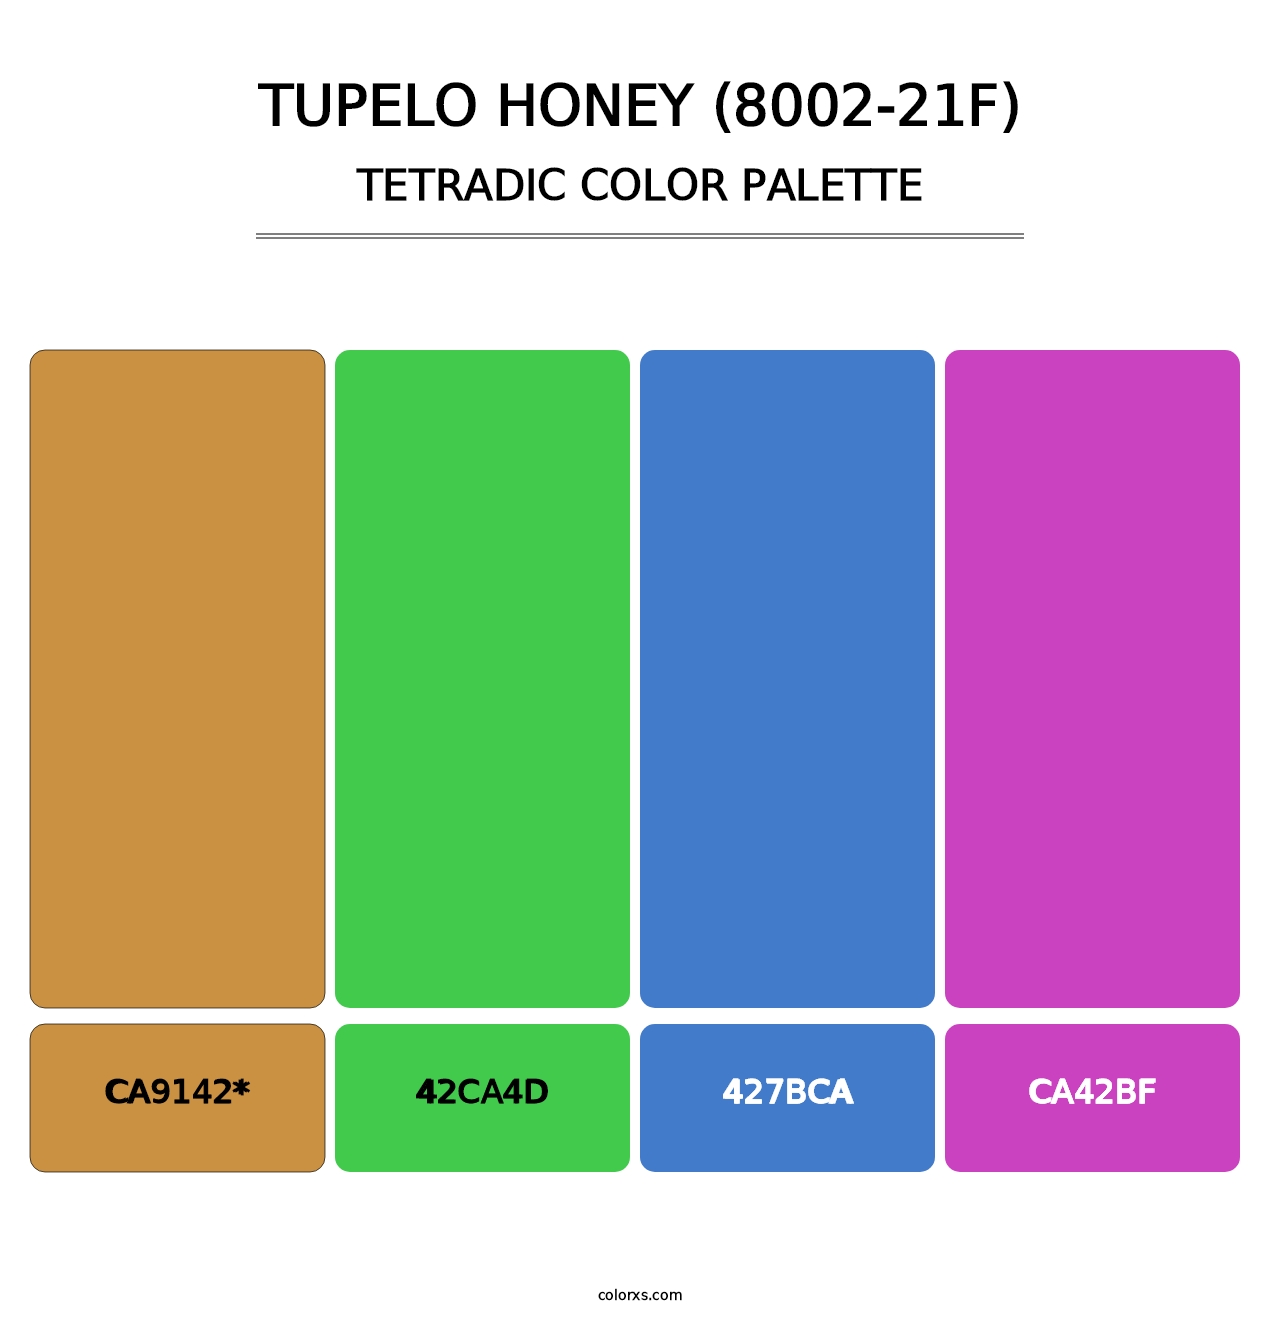 Tupelo Honey (8002-21F) - Tetradic Color Palette